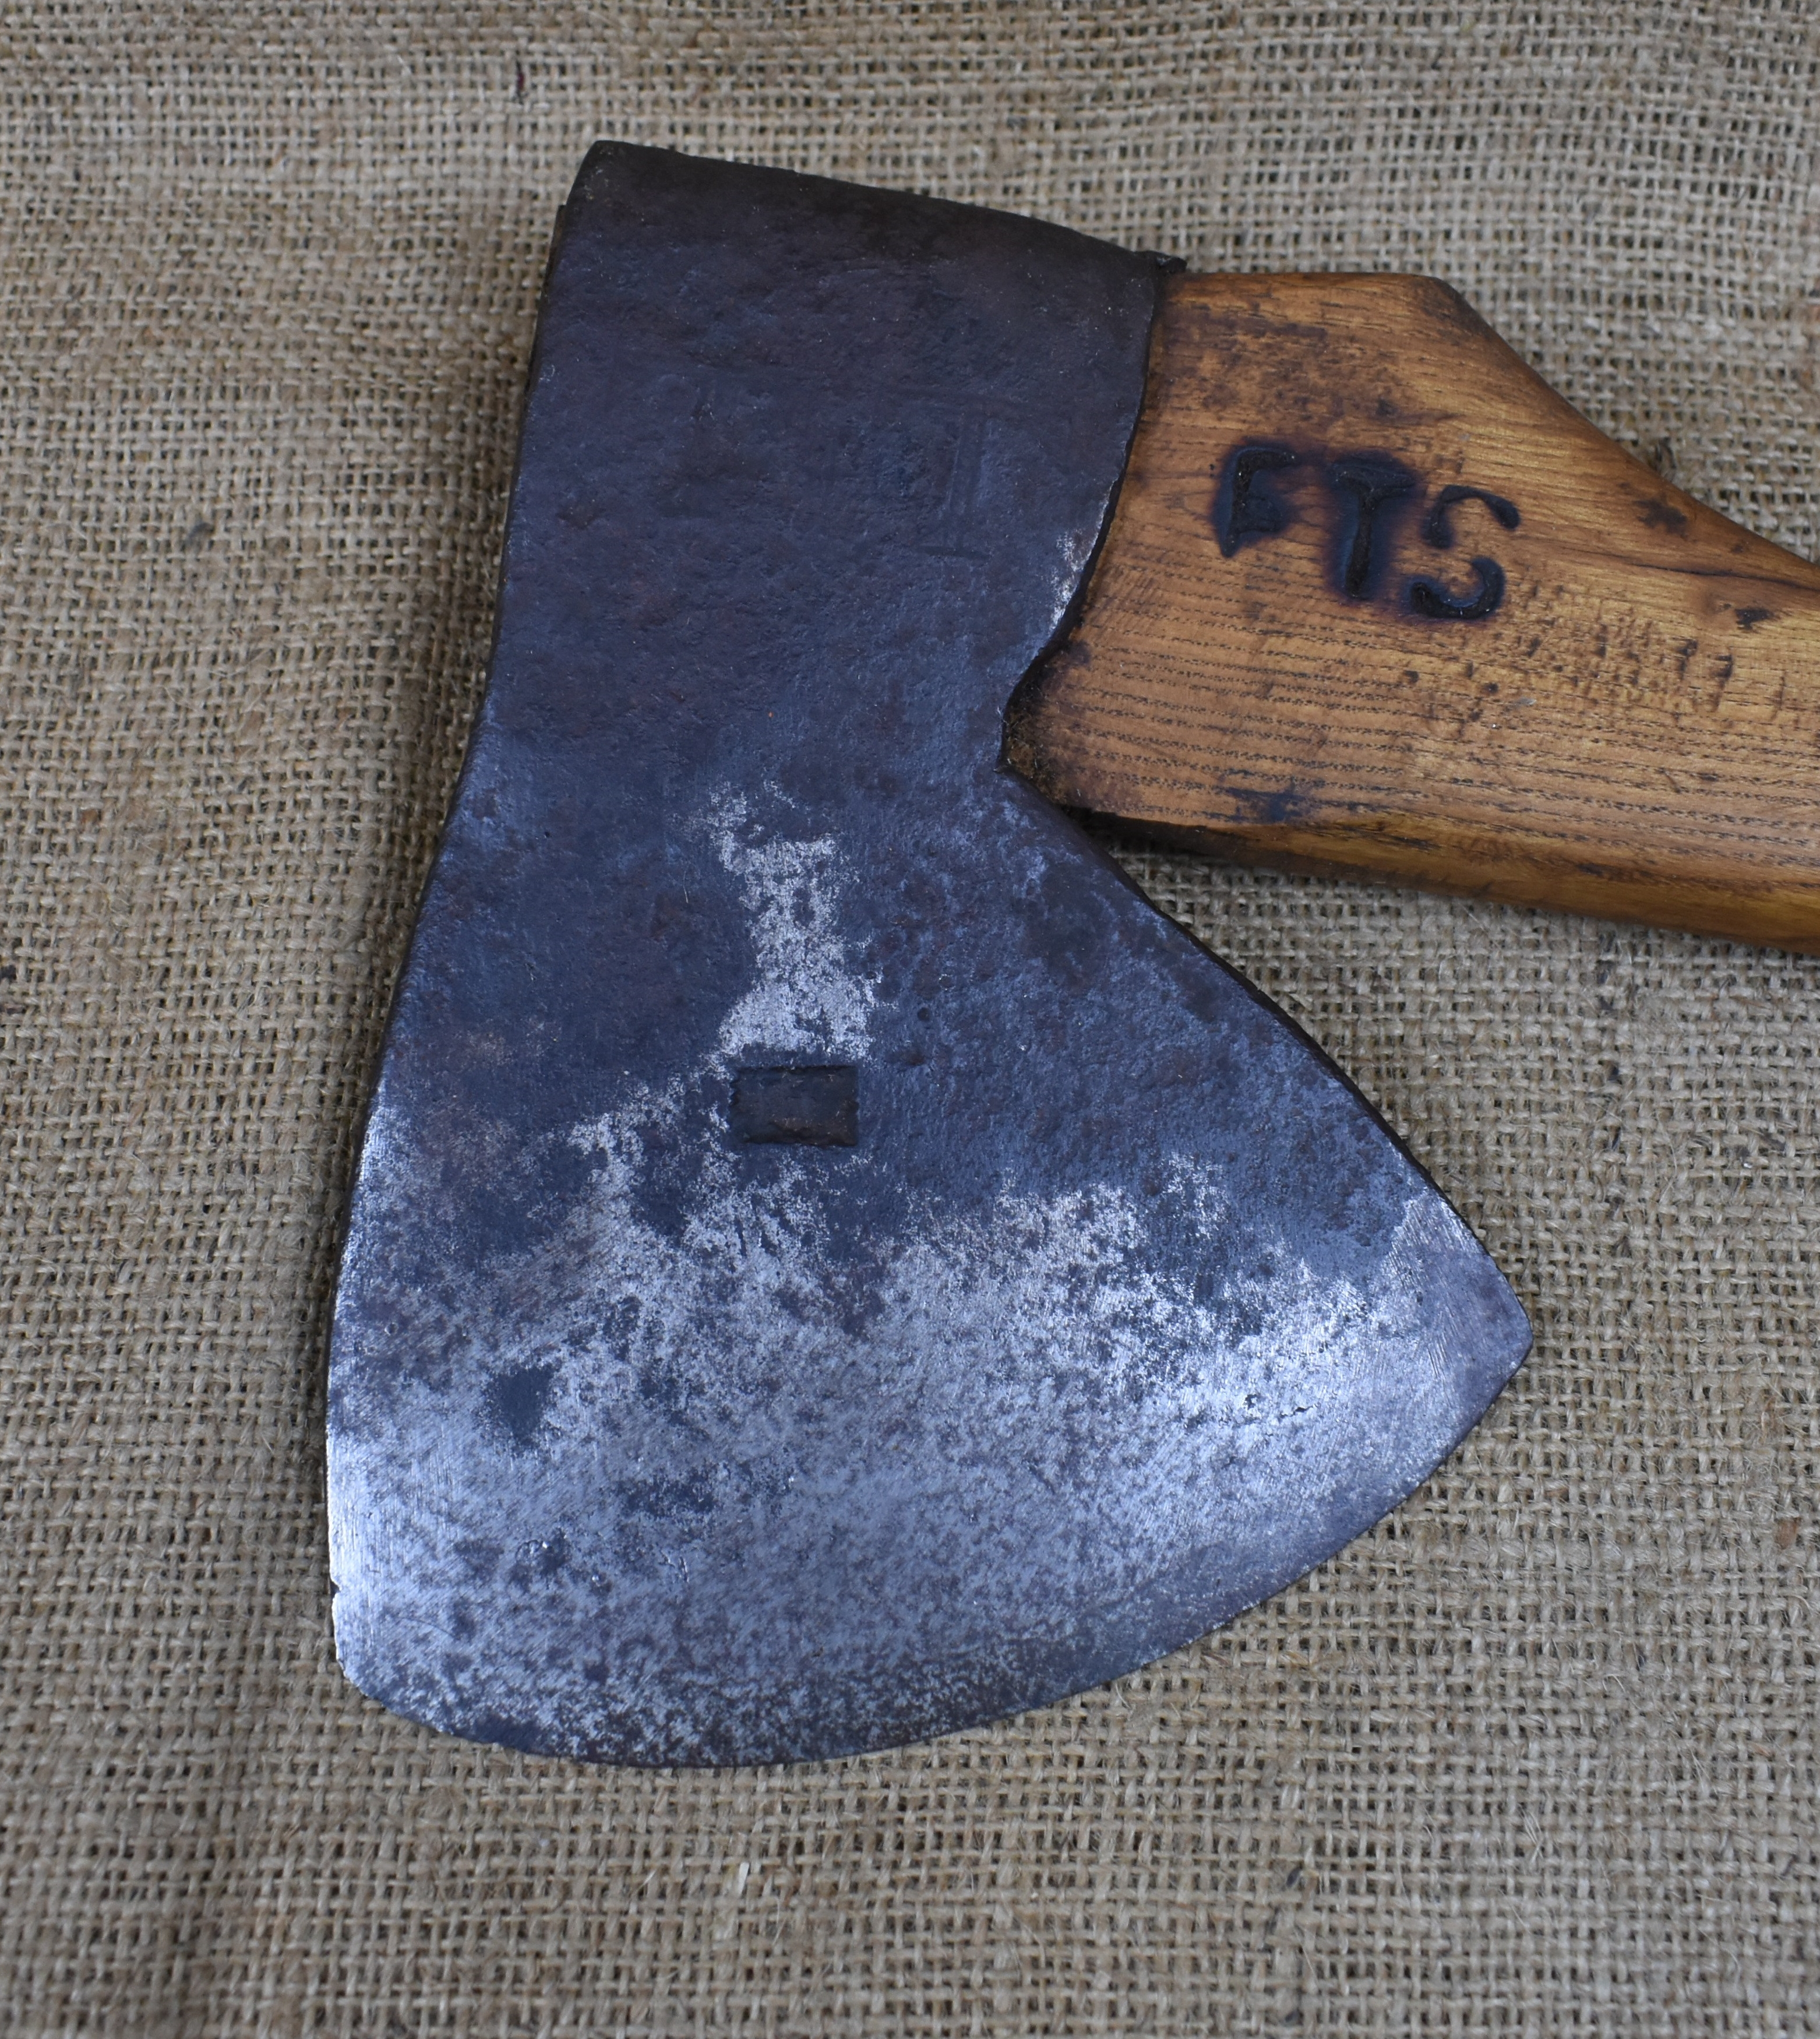 4lb lopping axe with blacksmith's mark